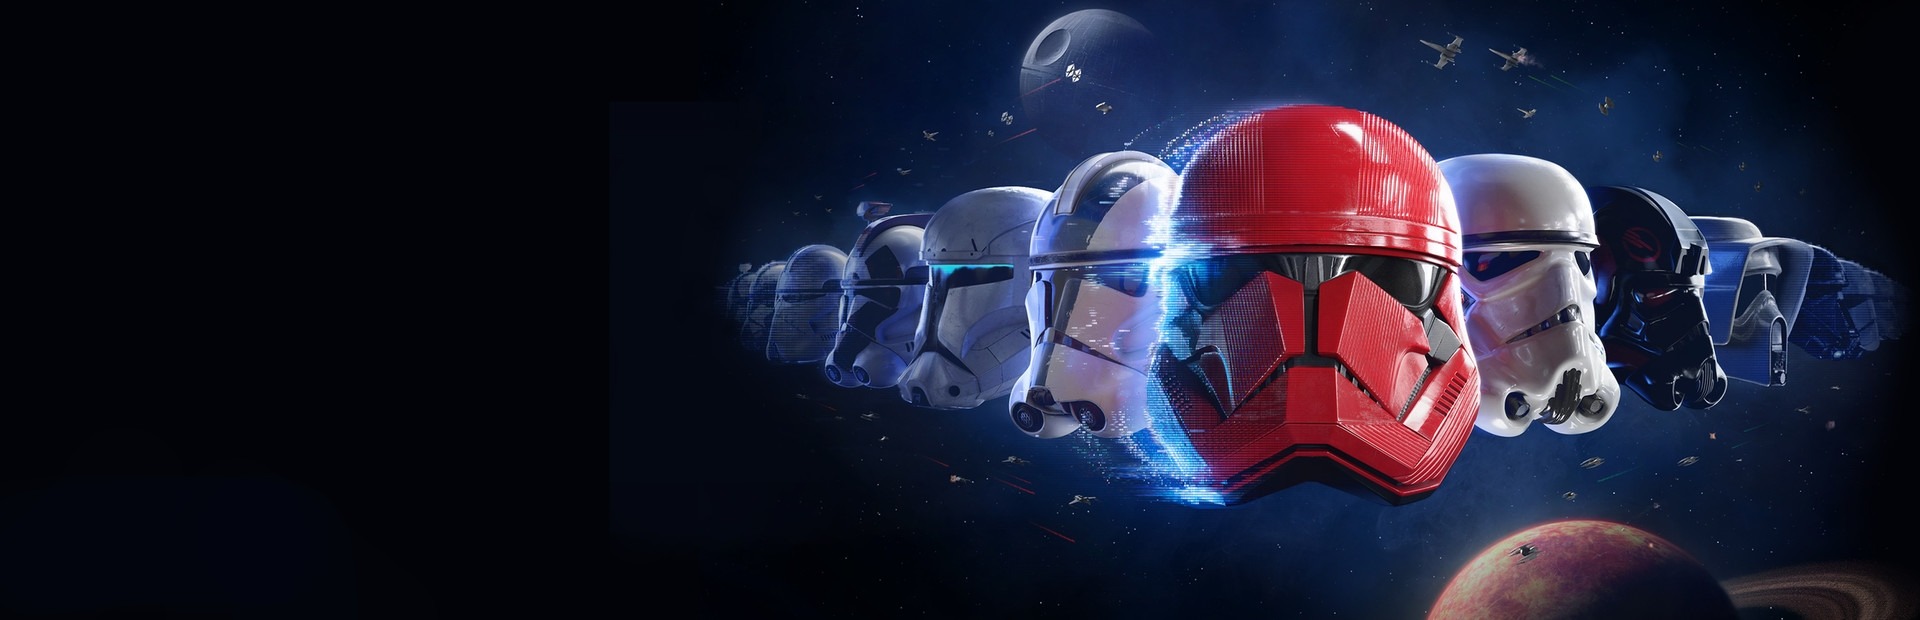 Comprar Star Wars: Battlefront II EA App